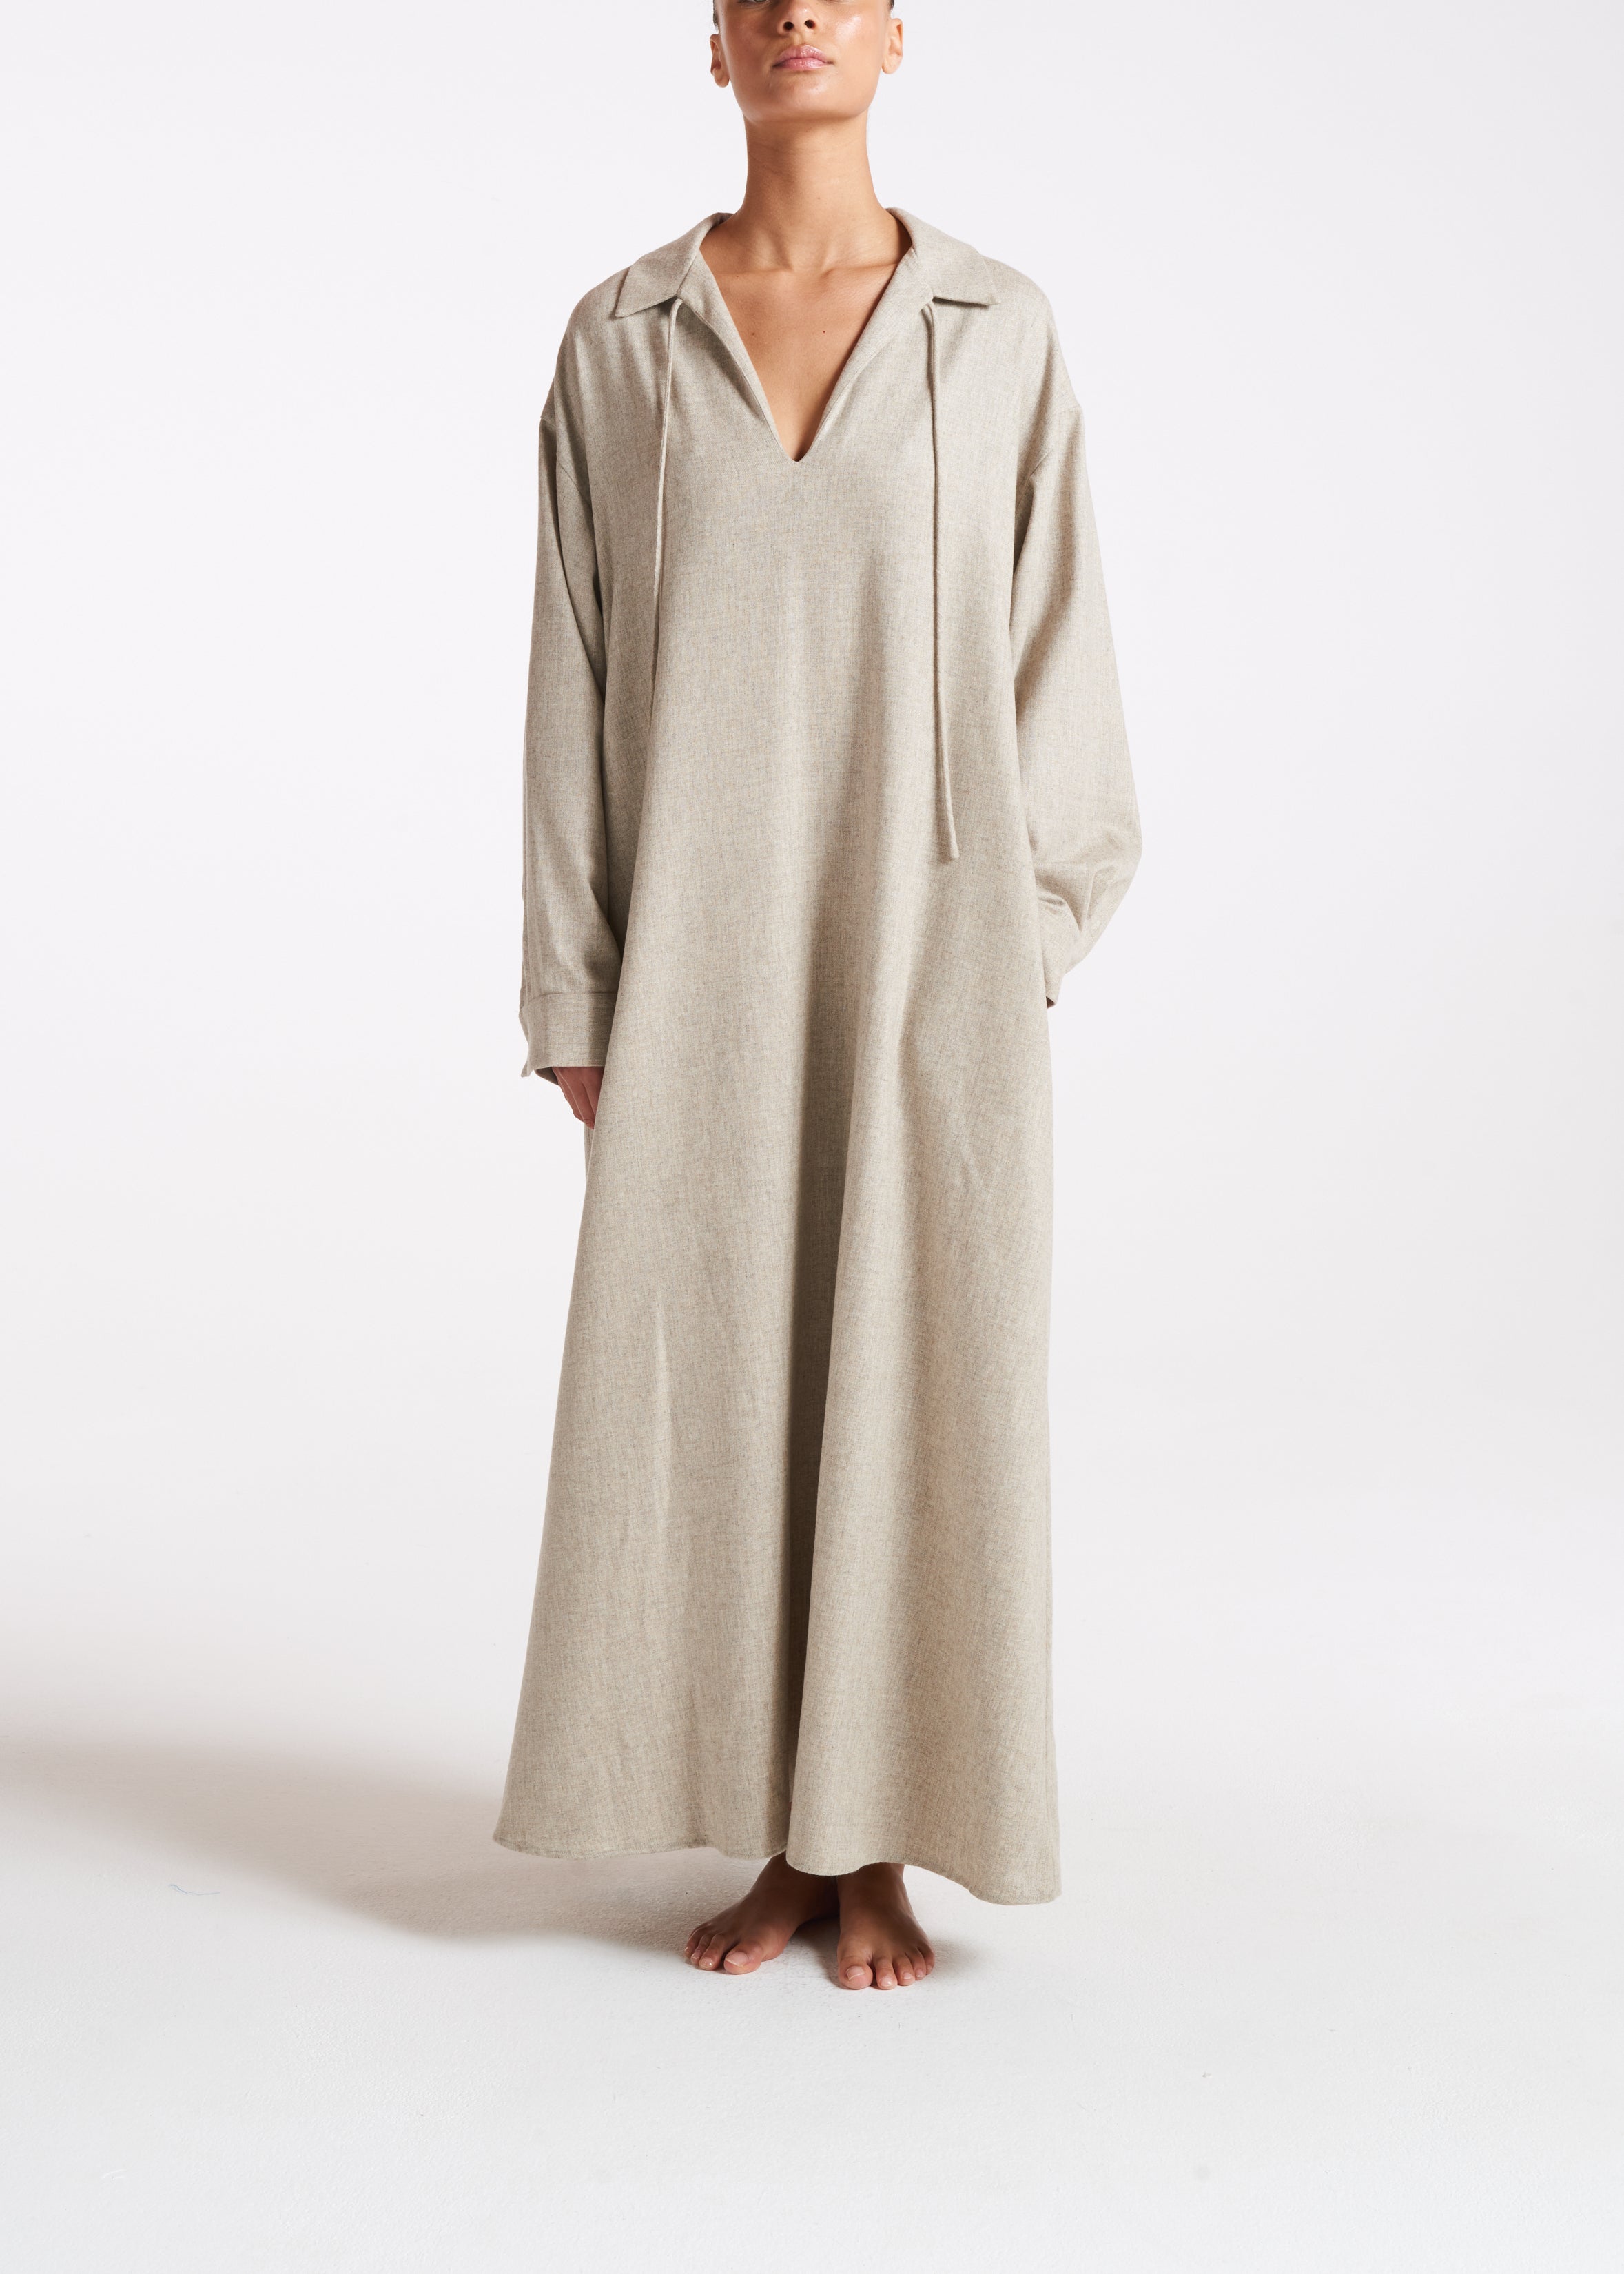 Luxury Silk & Linen Dresses for Women | Asceno - Shop Now